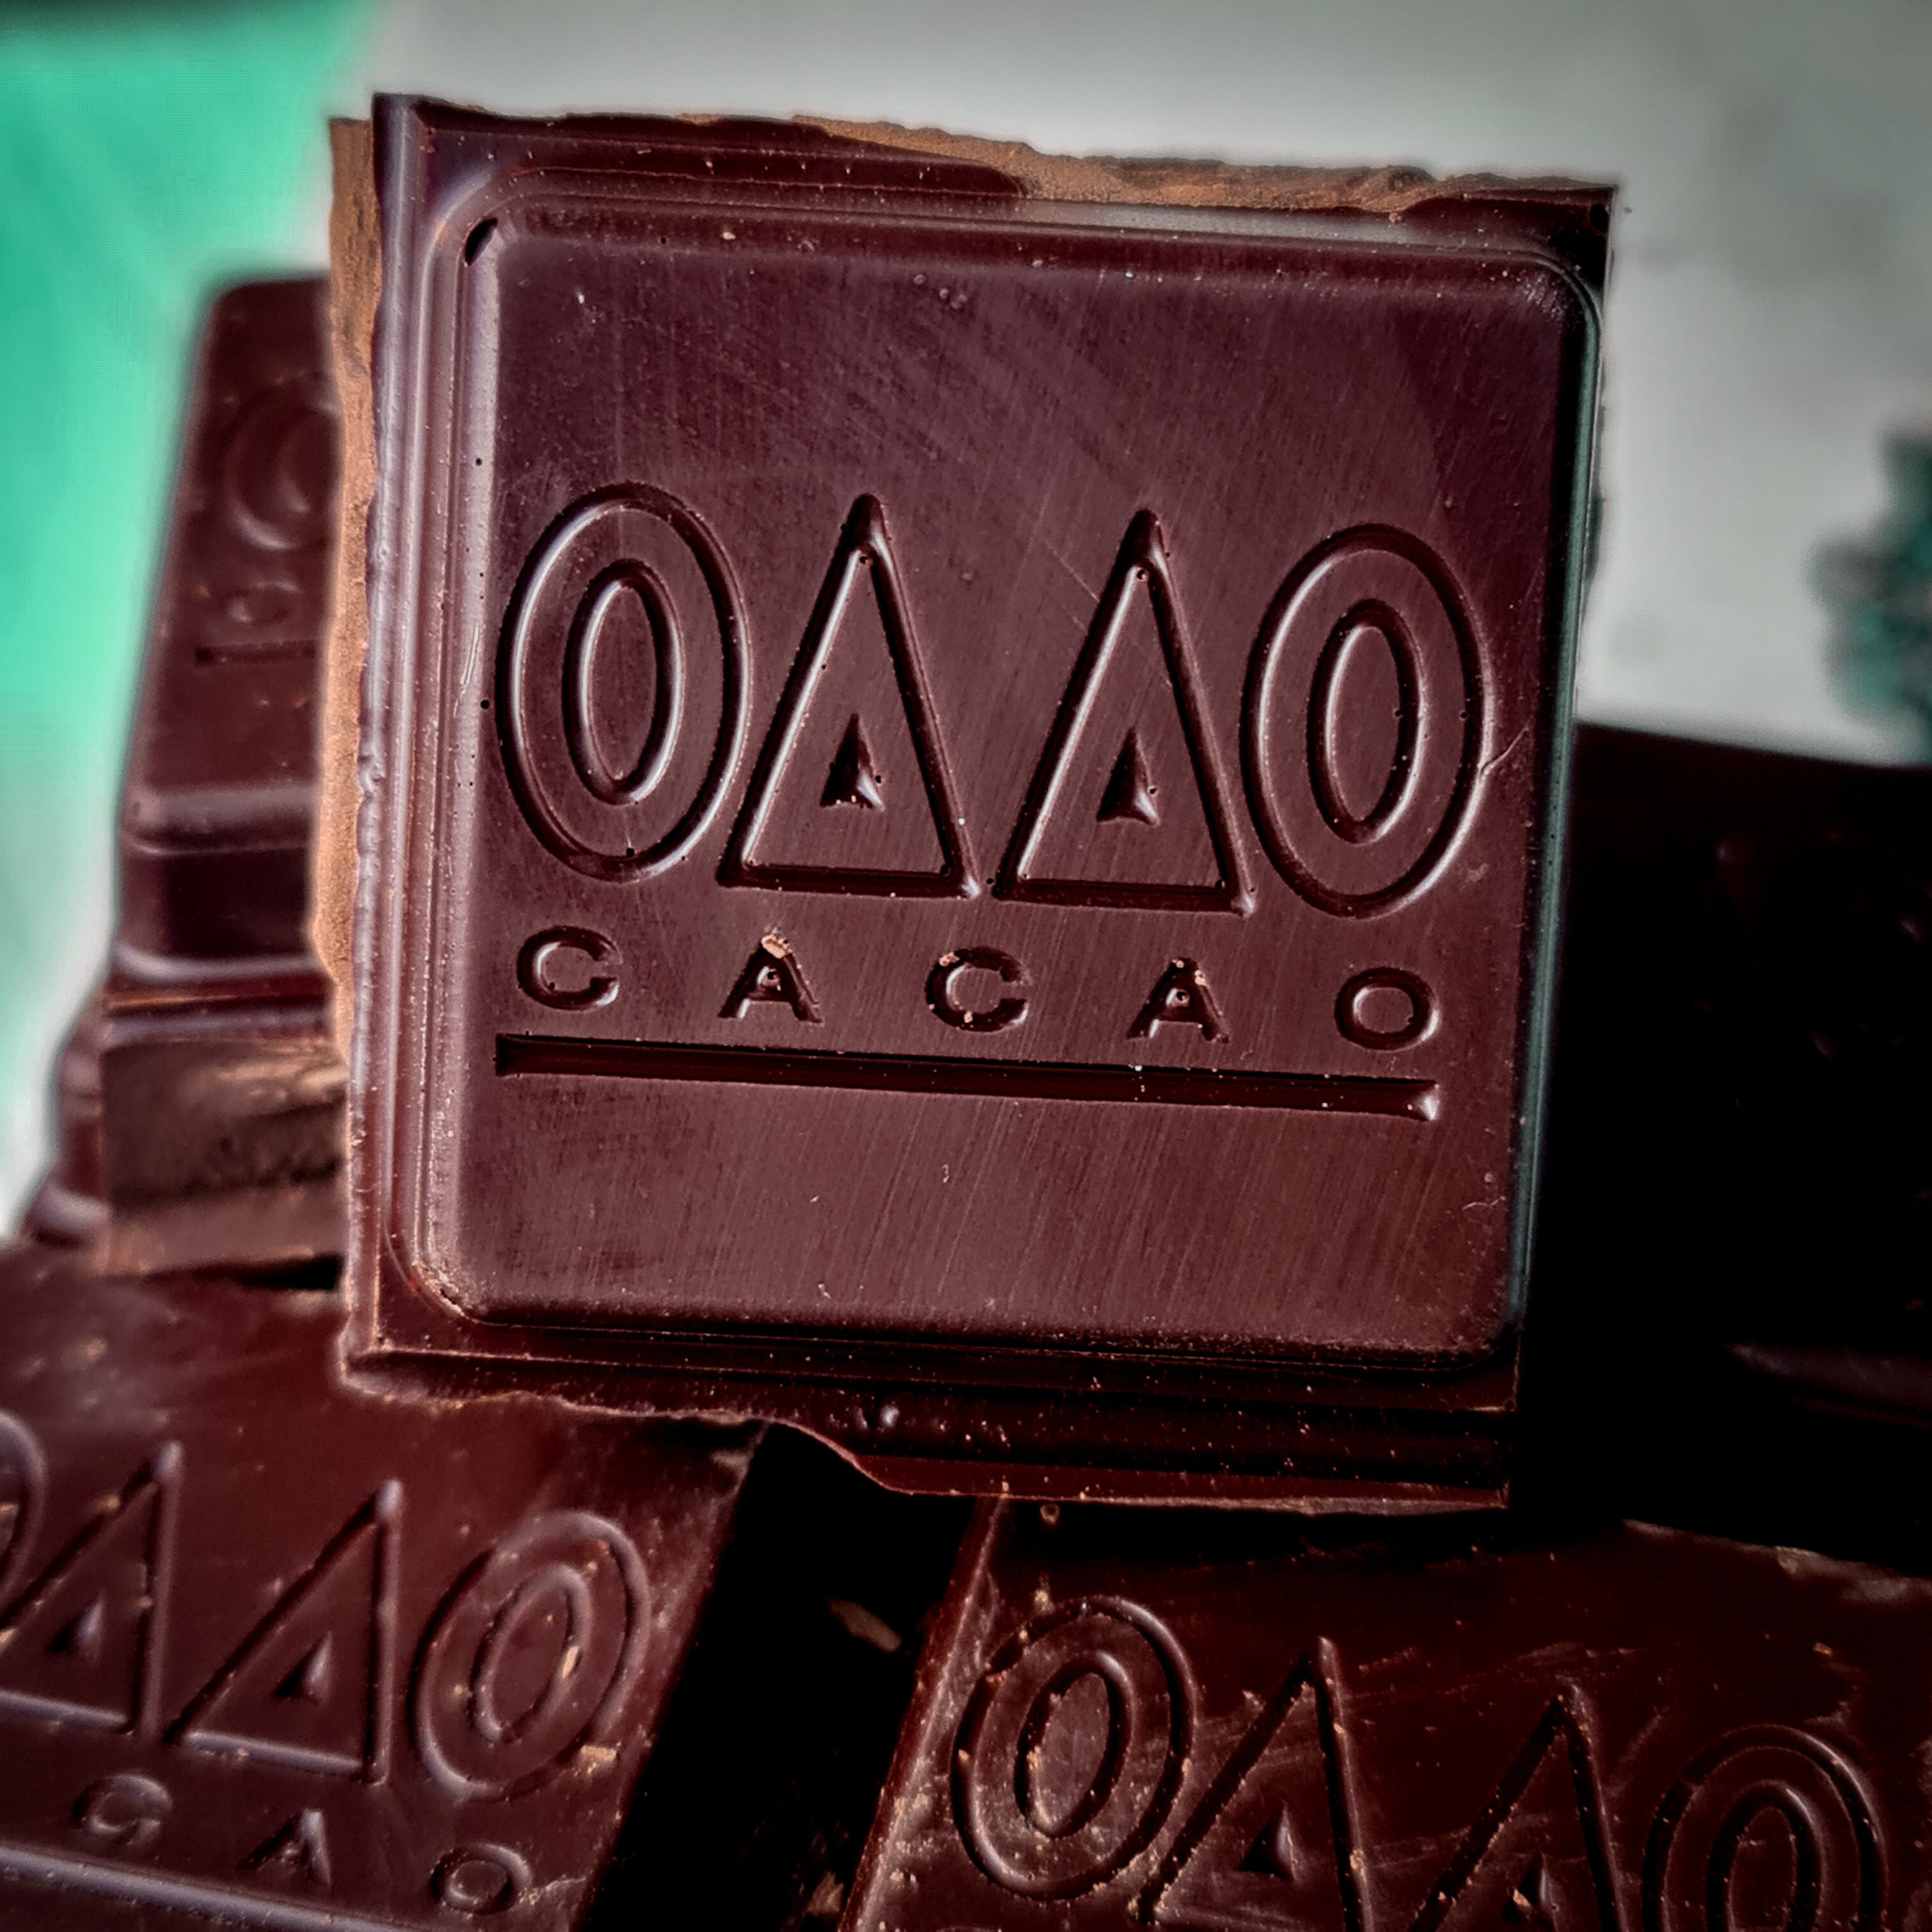 Magic Cacao - Zeremonieller Kakao